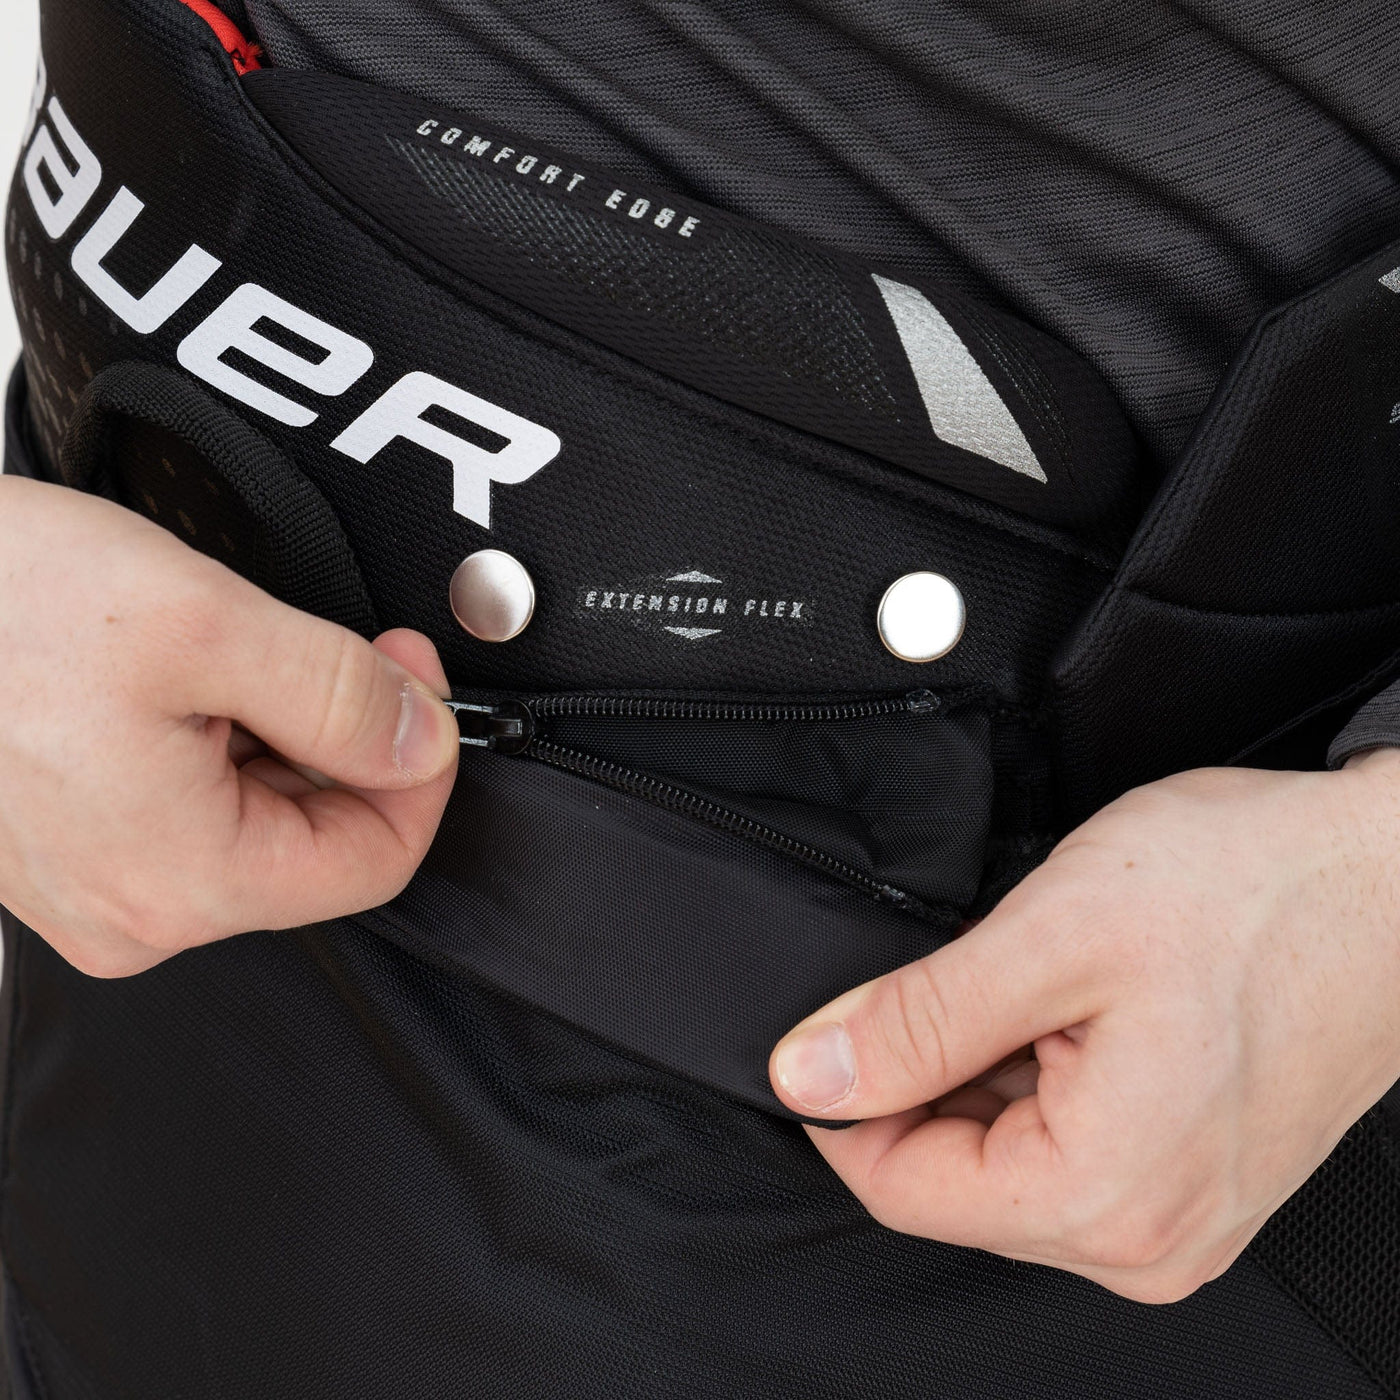 Bauer Vapor Shift Pro Intermediate Hockey Pants - The Hockey Shop Source For Sports